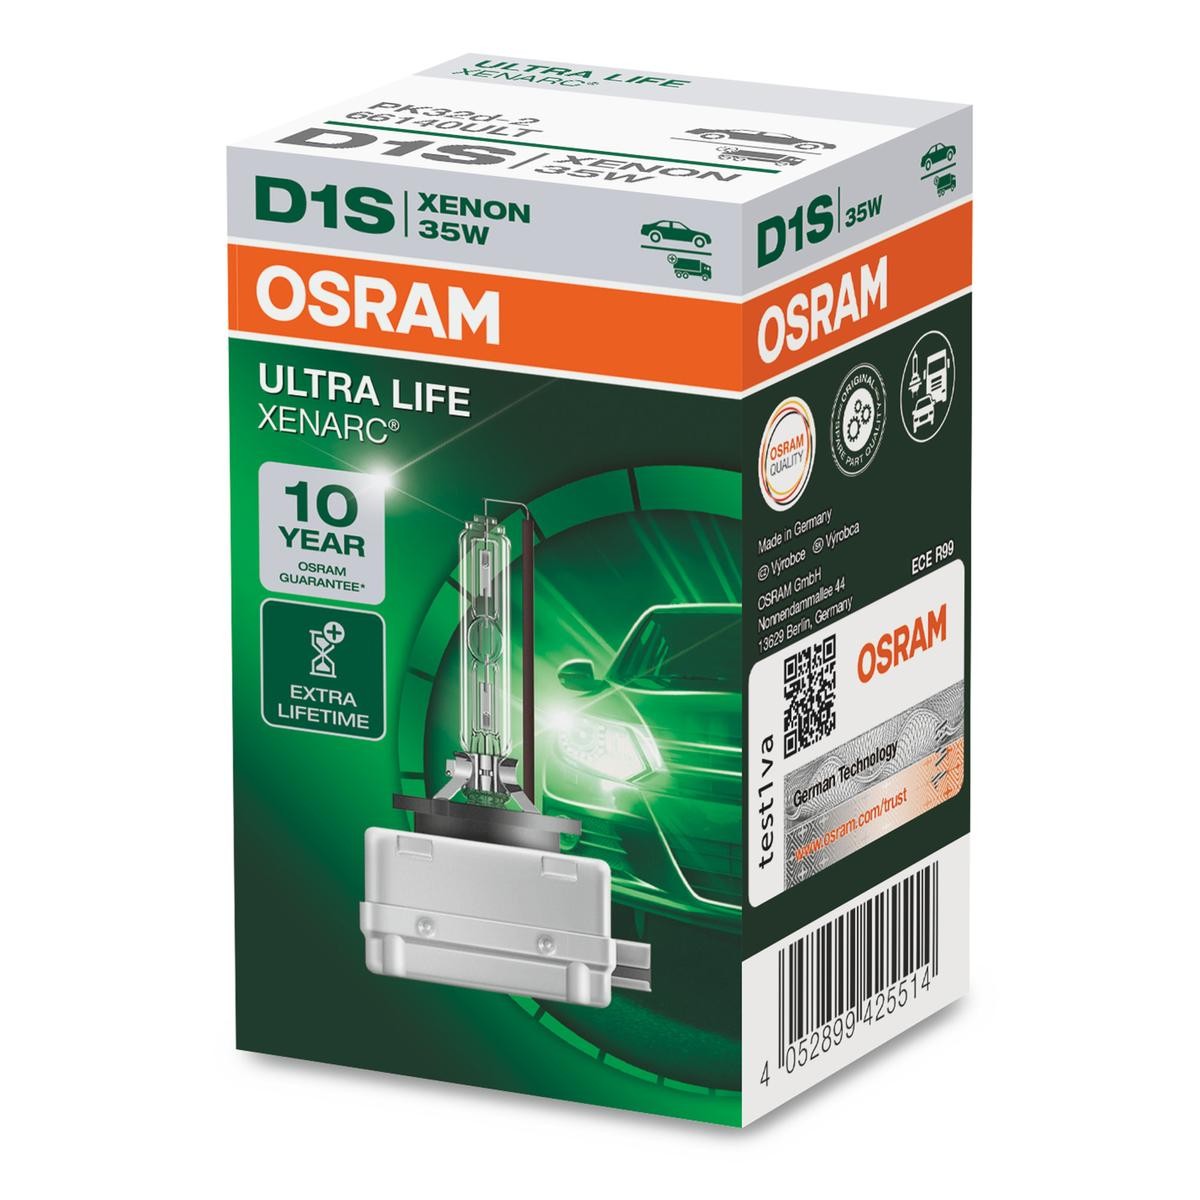 OSRAM XENARC ULTRA LIFE 66140ULT Bulb, spotlight D1S 85V 35W Pk32d-2, 4200K, Xenon